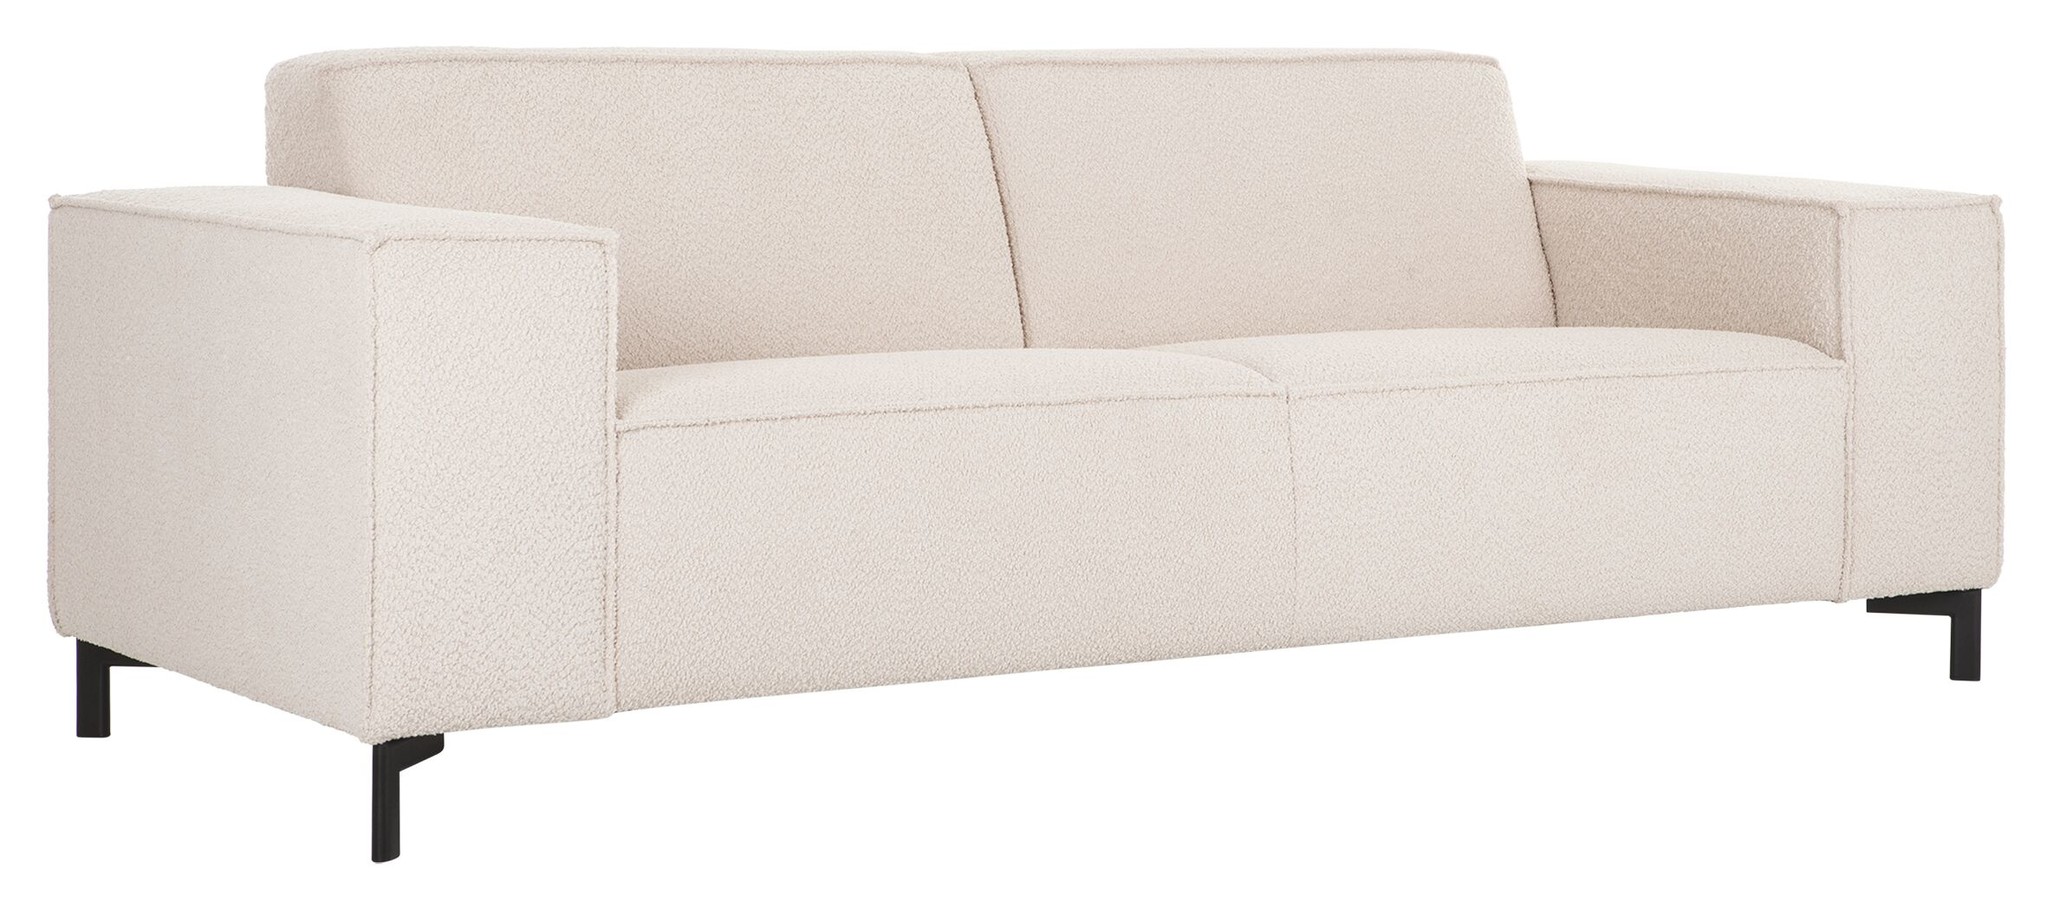 Petite Lily Interiors Sofa / Couch - 3PL, cream/ecru, 78x221x93cm